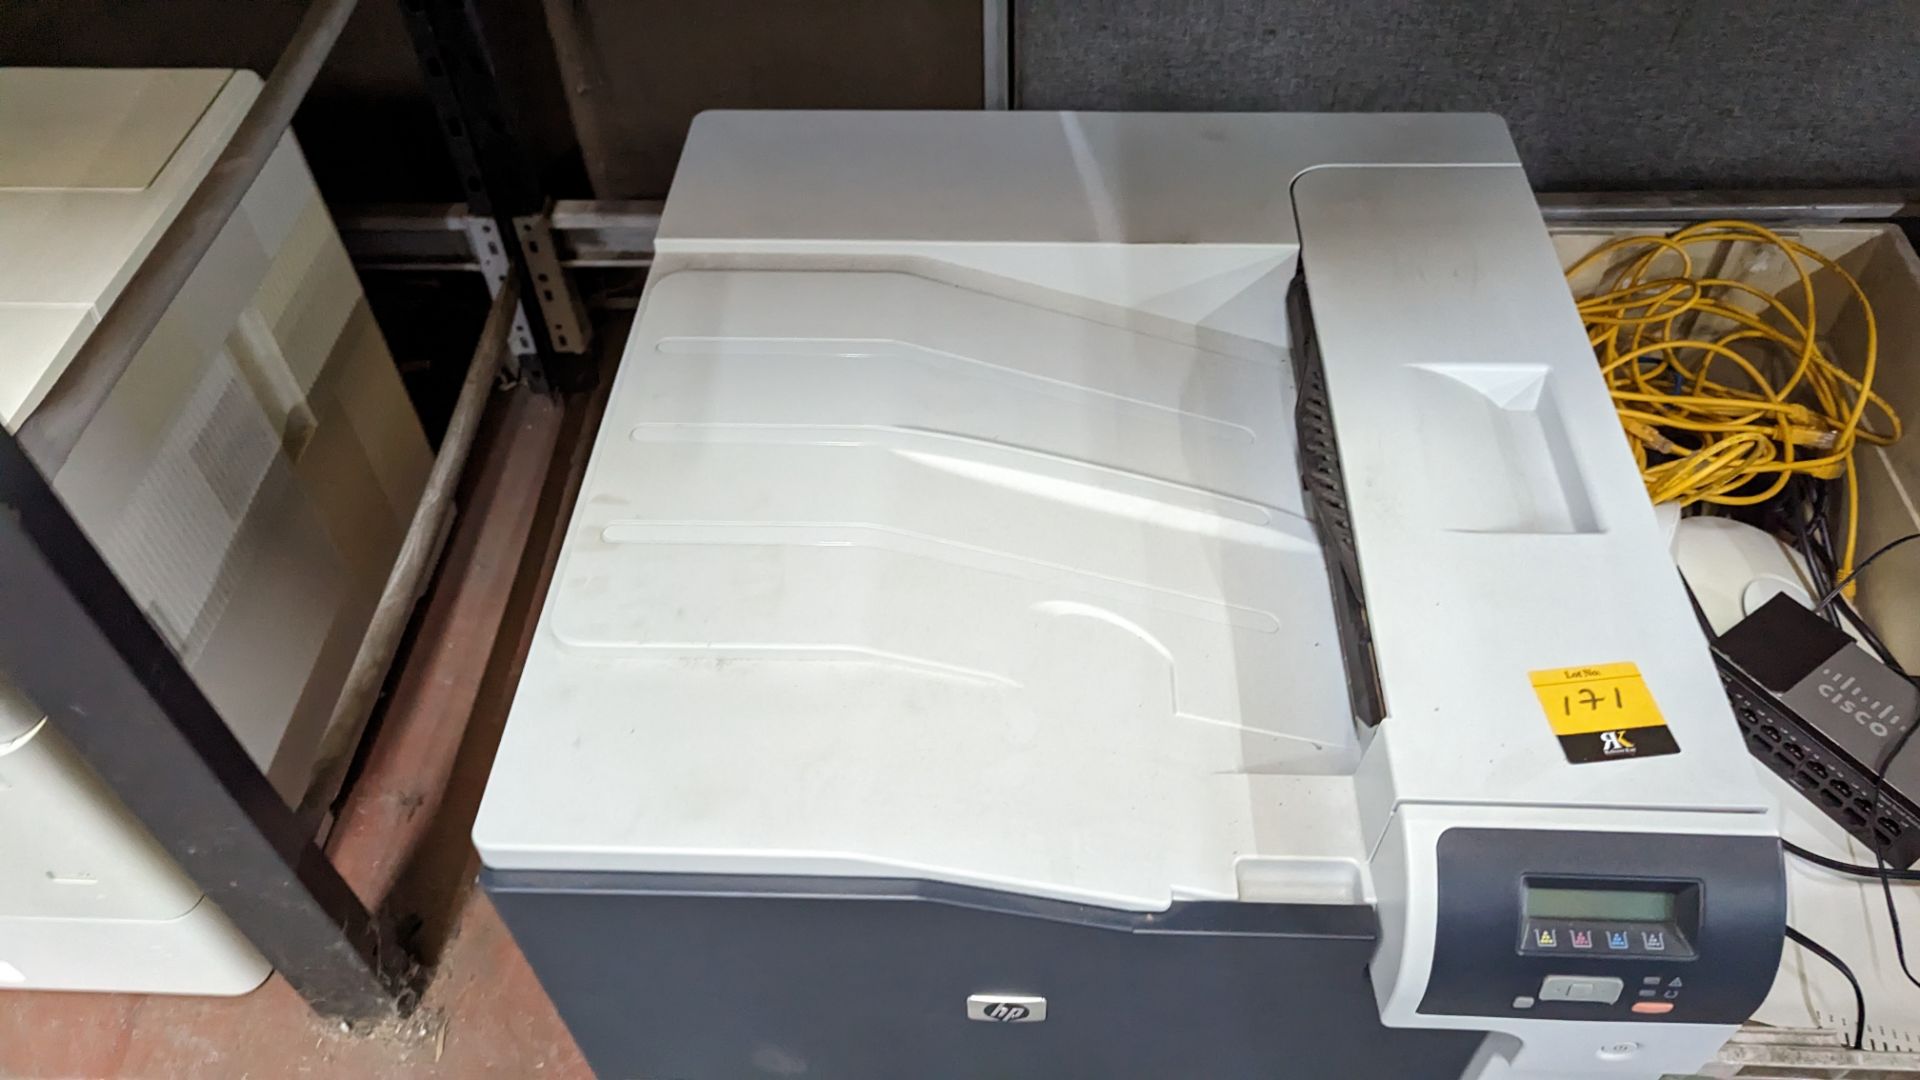 HP colour LaserJet printer model CP5225 - Image 5 of 6